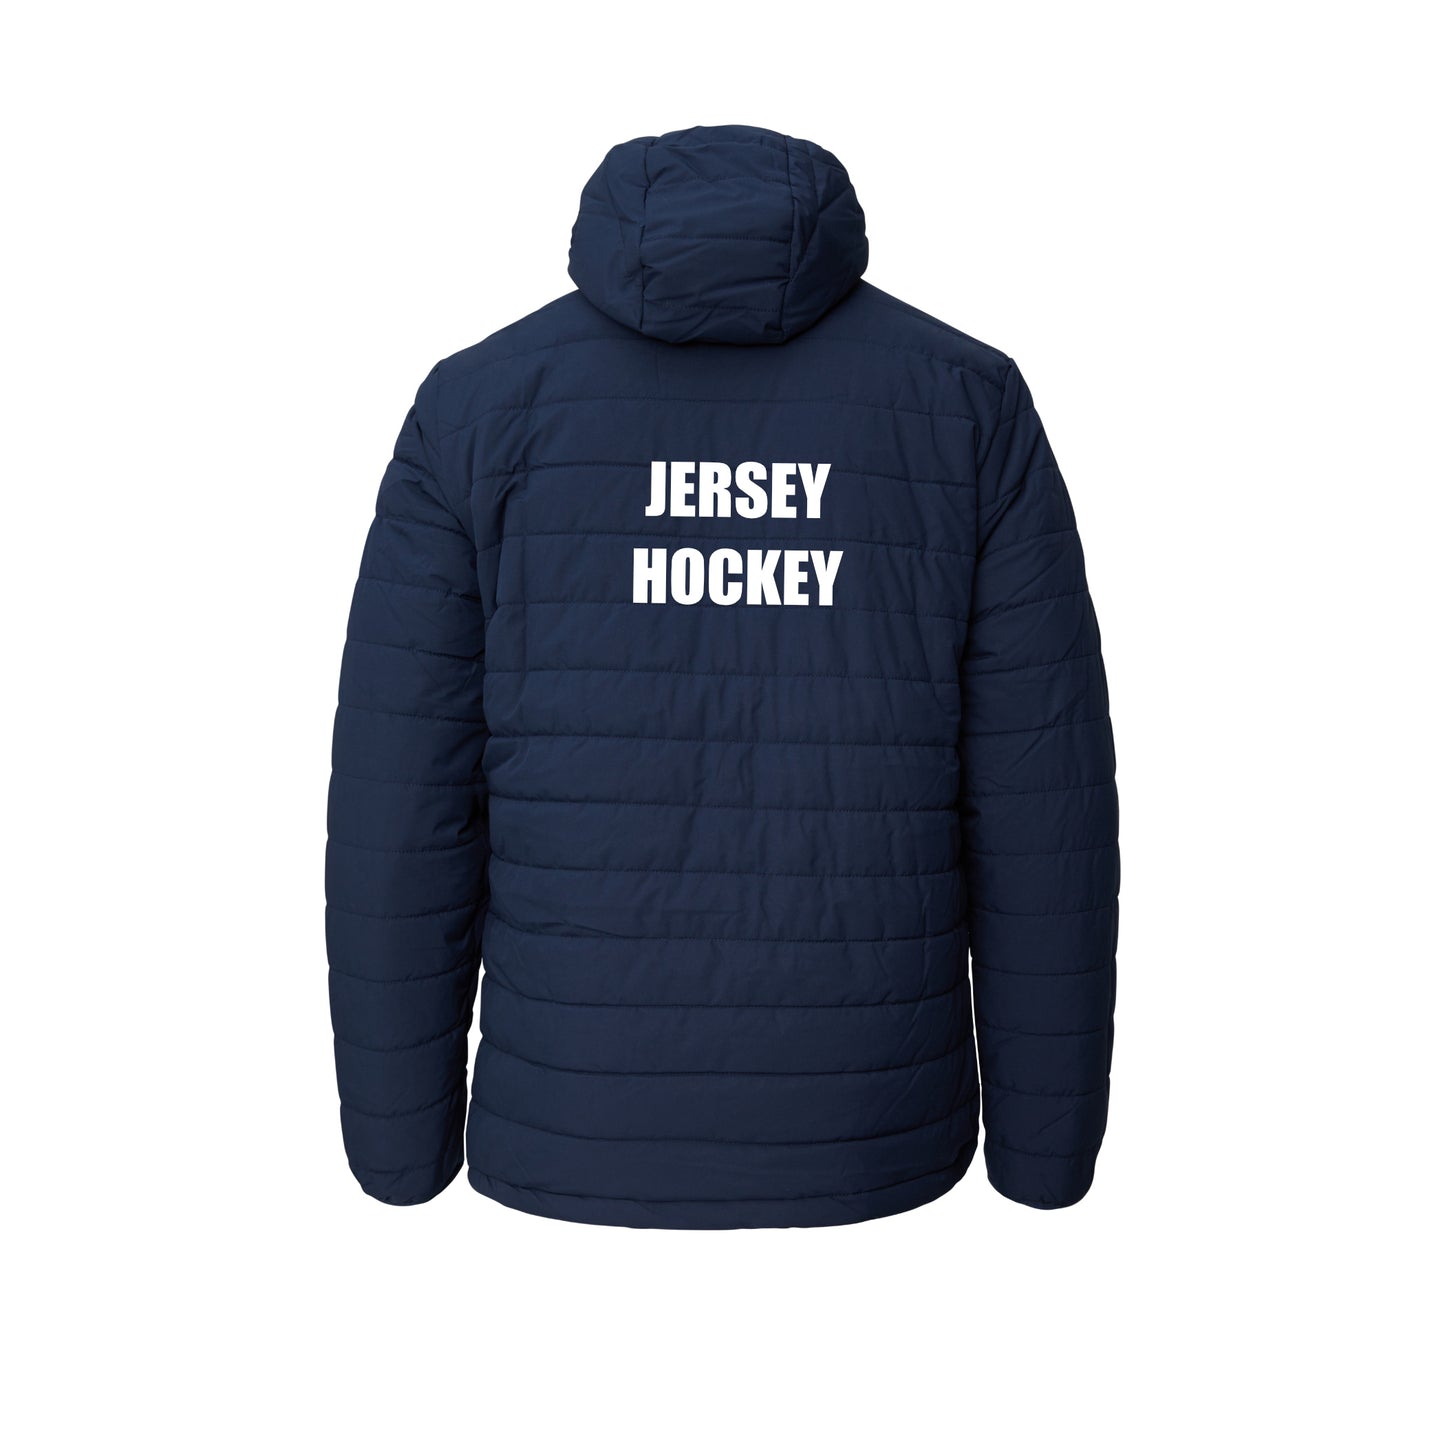 Jersey Hockey - Padded Jacket Unisex Navy